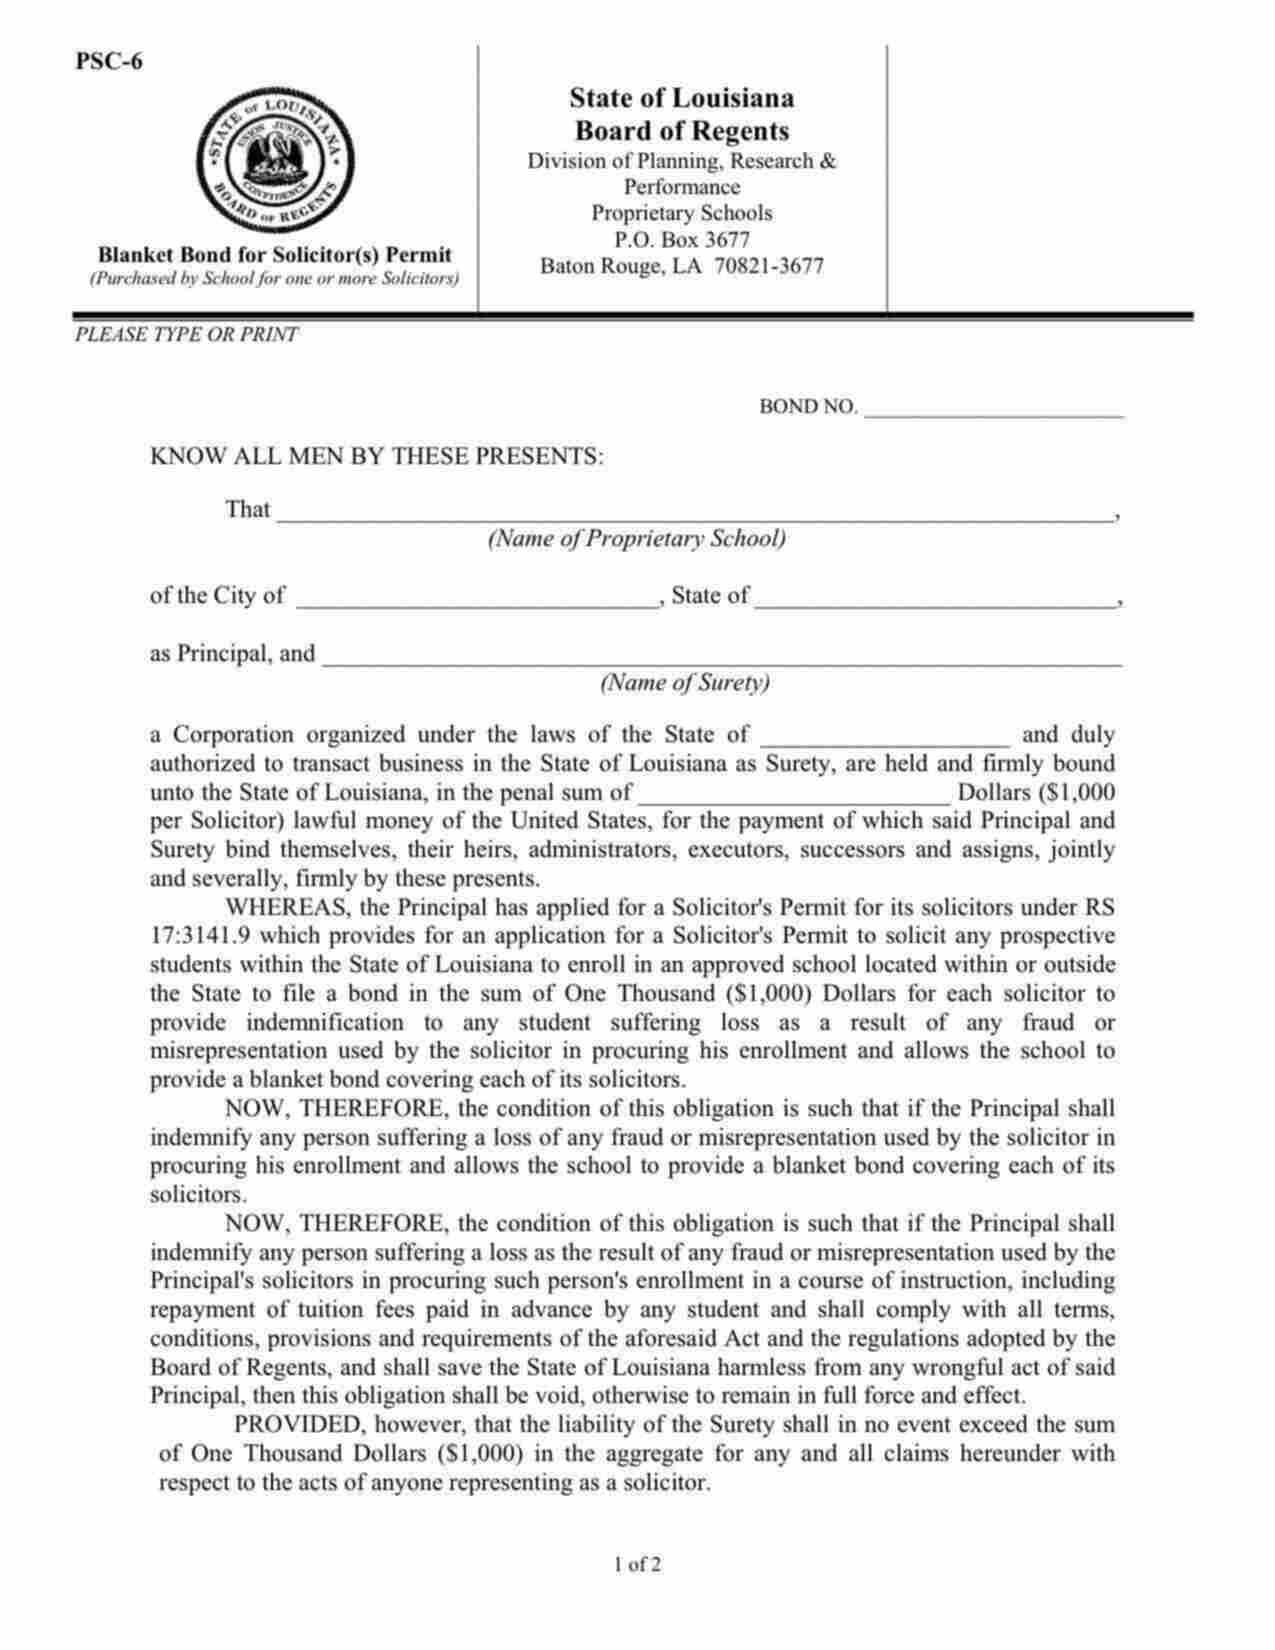 Louisiana Proprietary Schools -Solicitor(s) Permit Blanket Bond Form